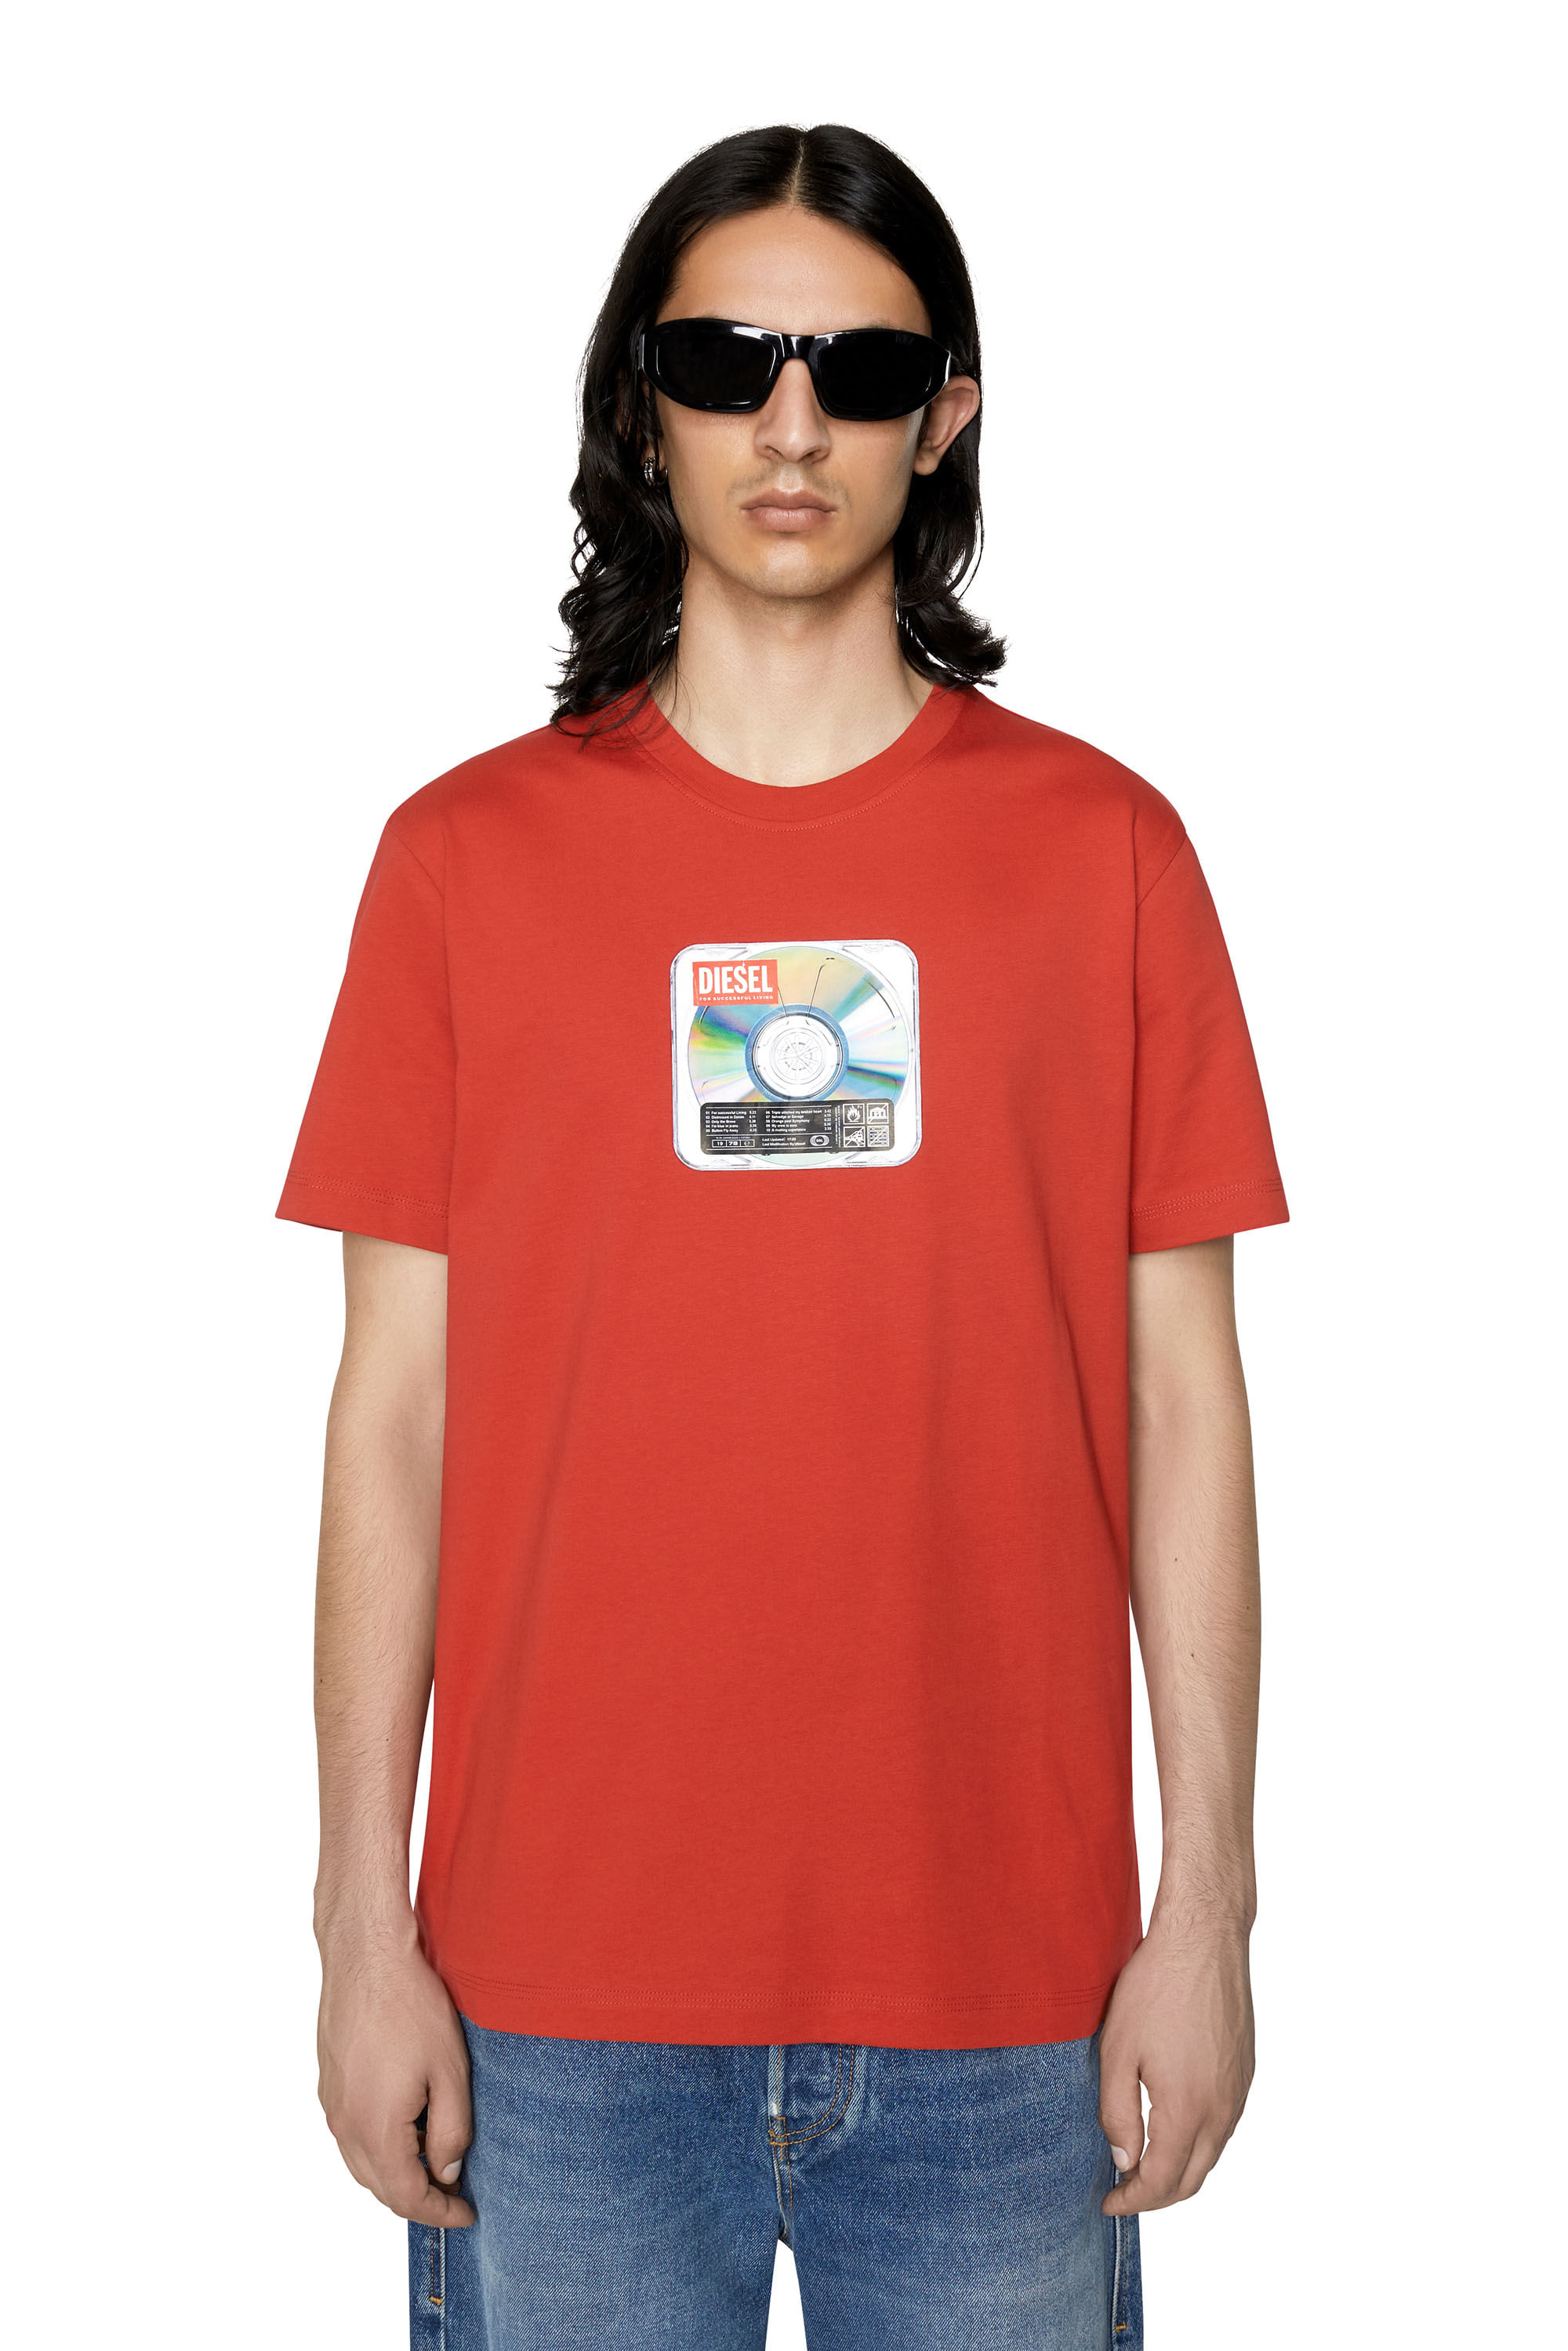 Diesel Camiseta Manga Corta Para Hombre T Diegor E16 259572 - Compra Ahora